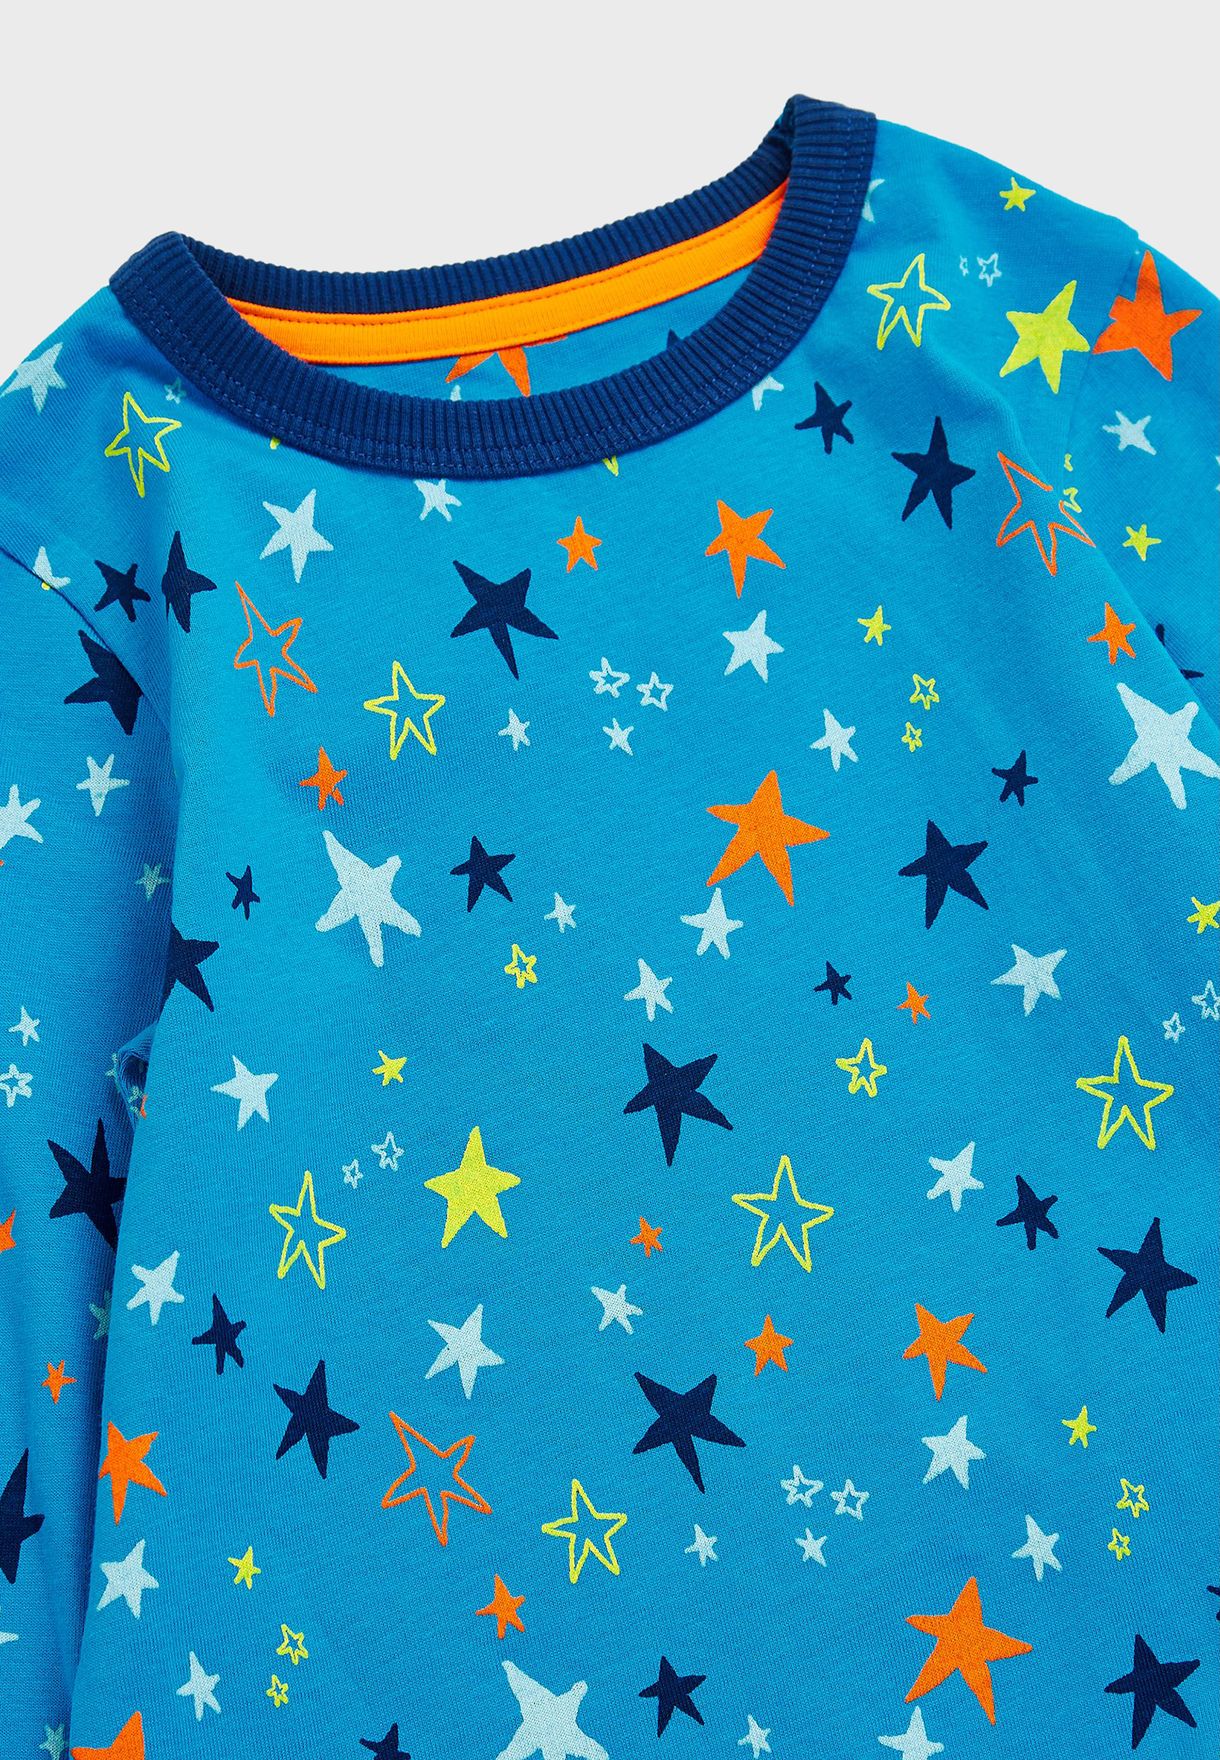 Kids Aop Print Pyjama Set